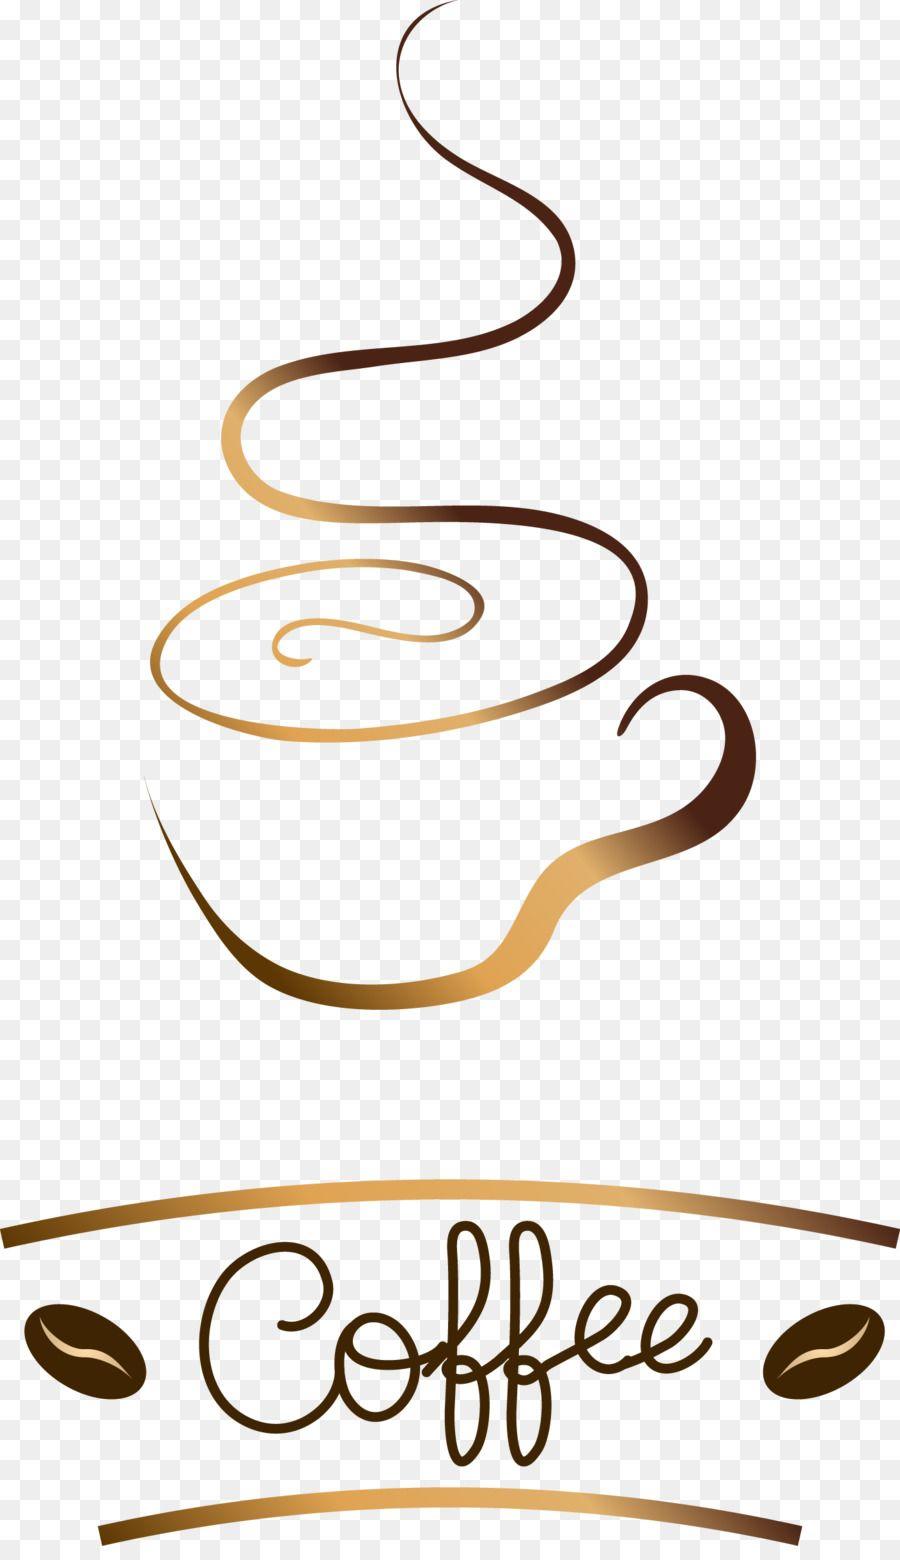 Brown Line Logo - Coffee Logo Clip art pen golden brown coffee logo logo png